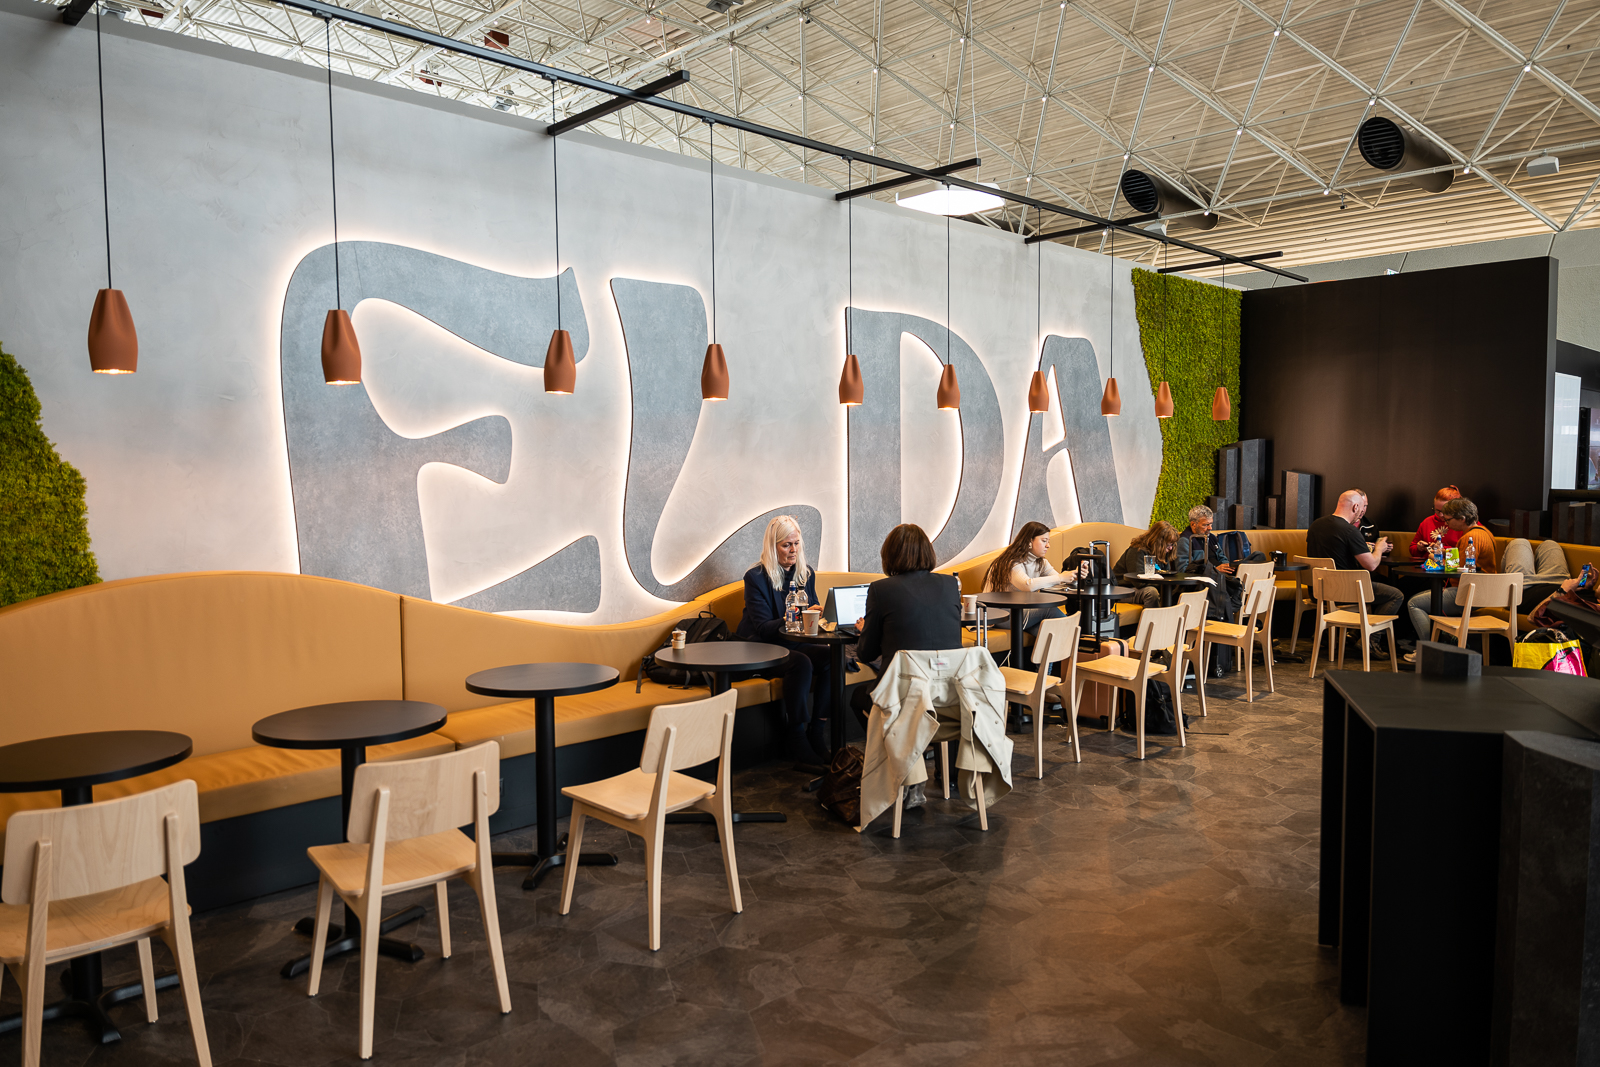 Elda restaurant opens at Keflavik Airport